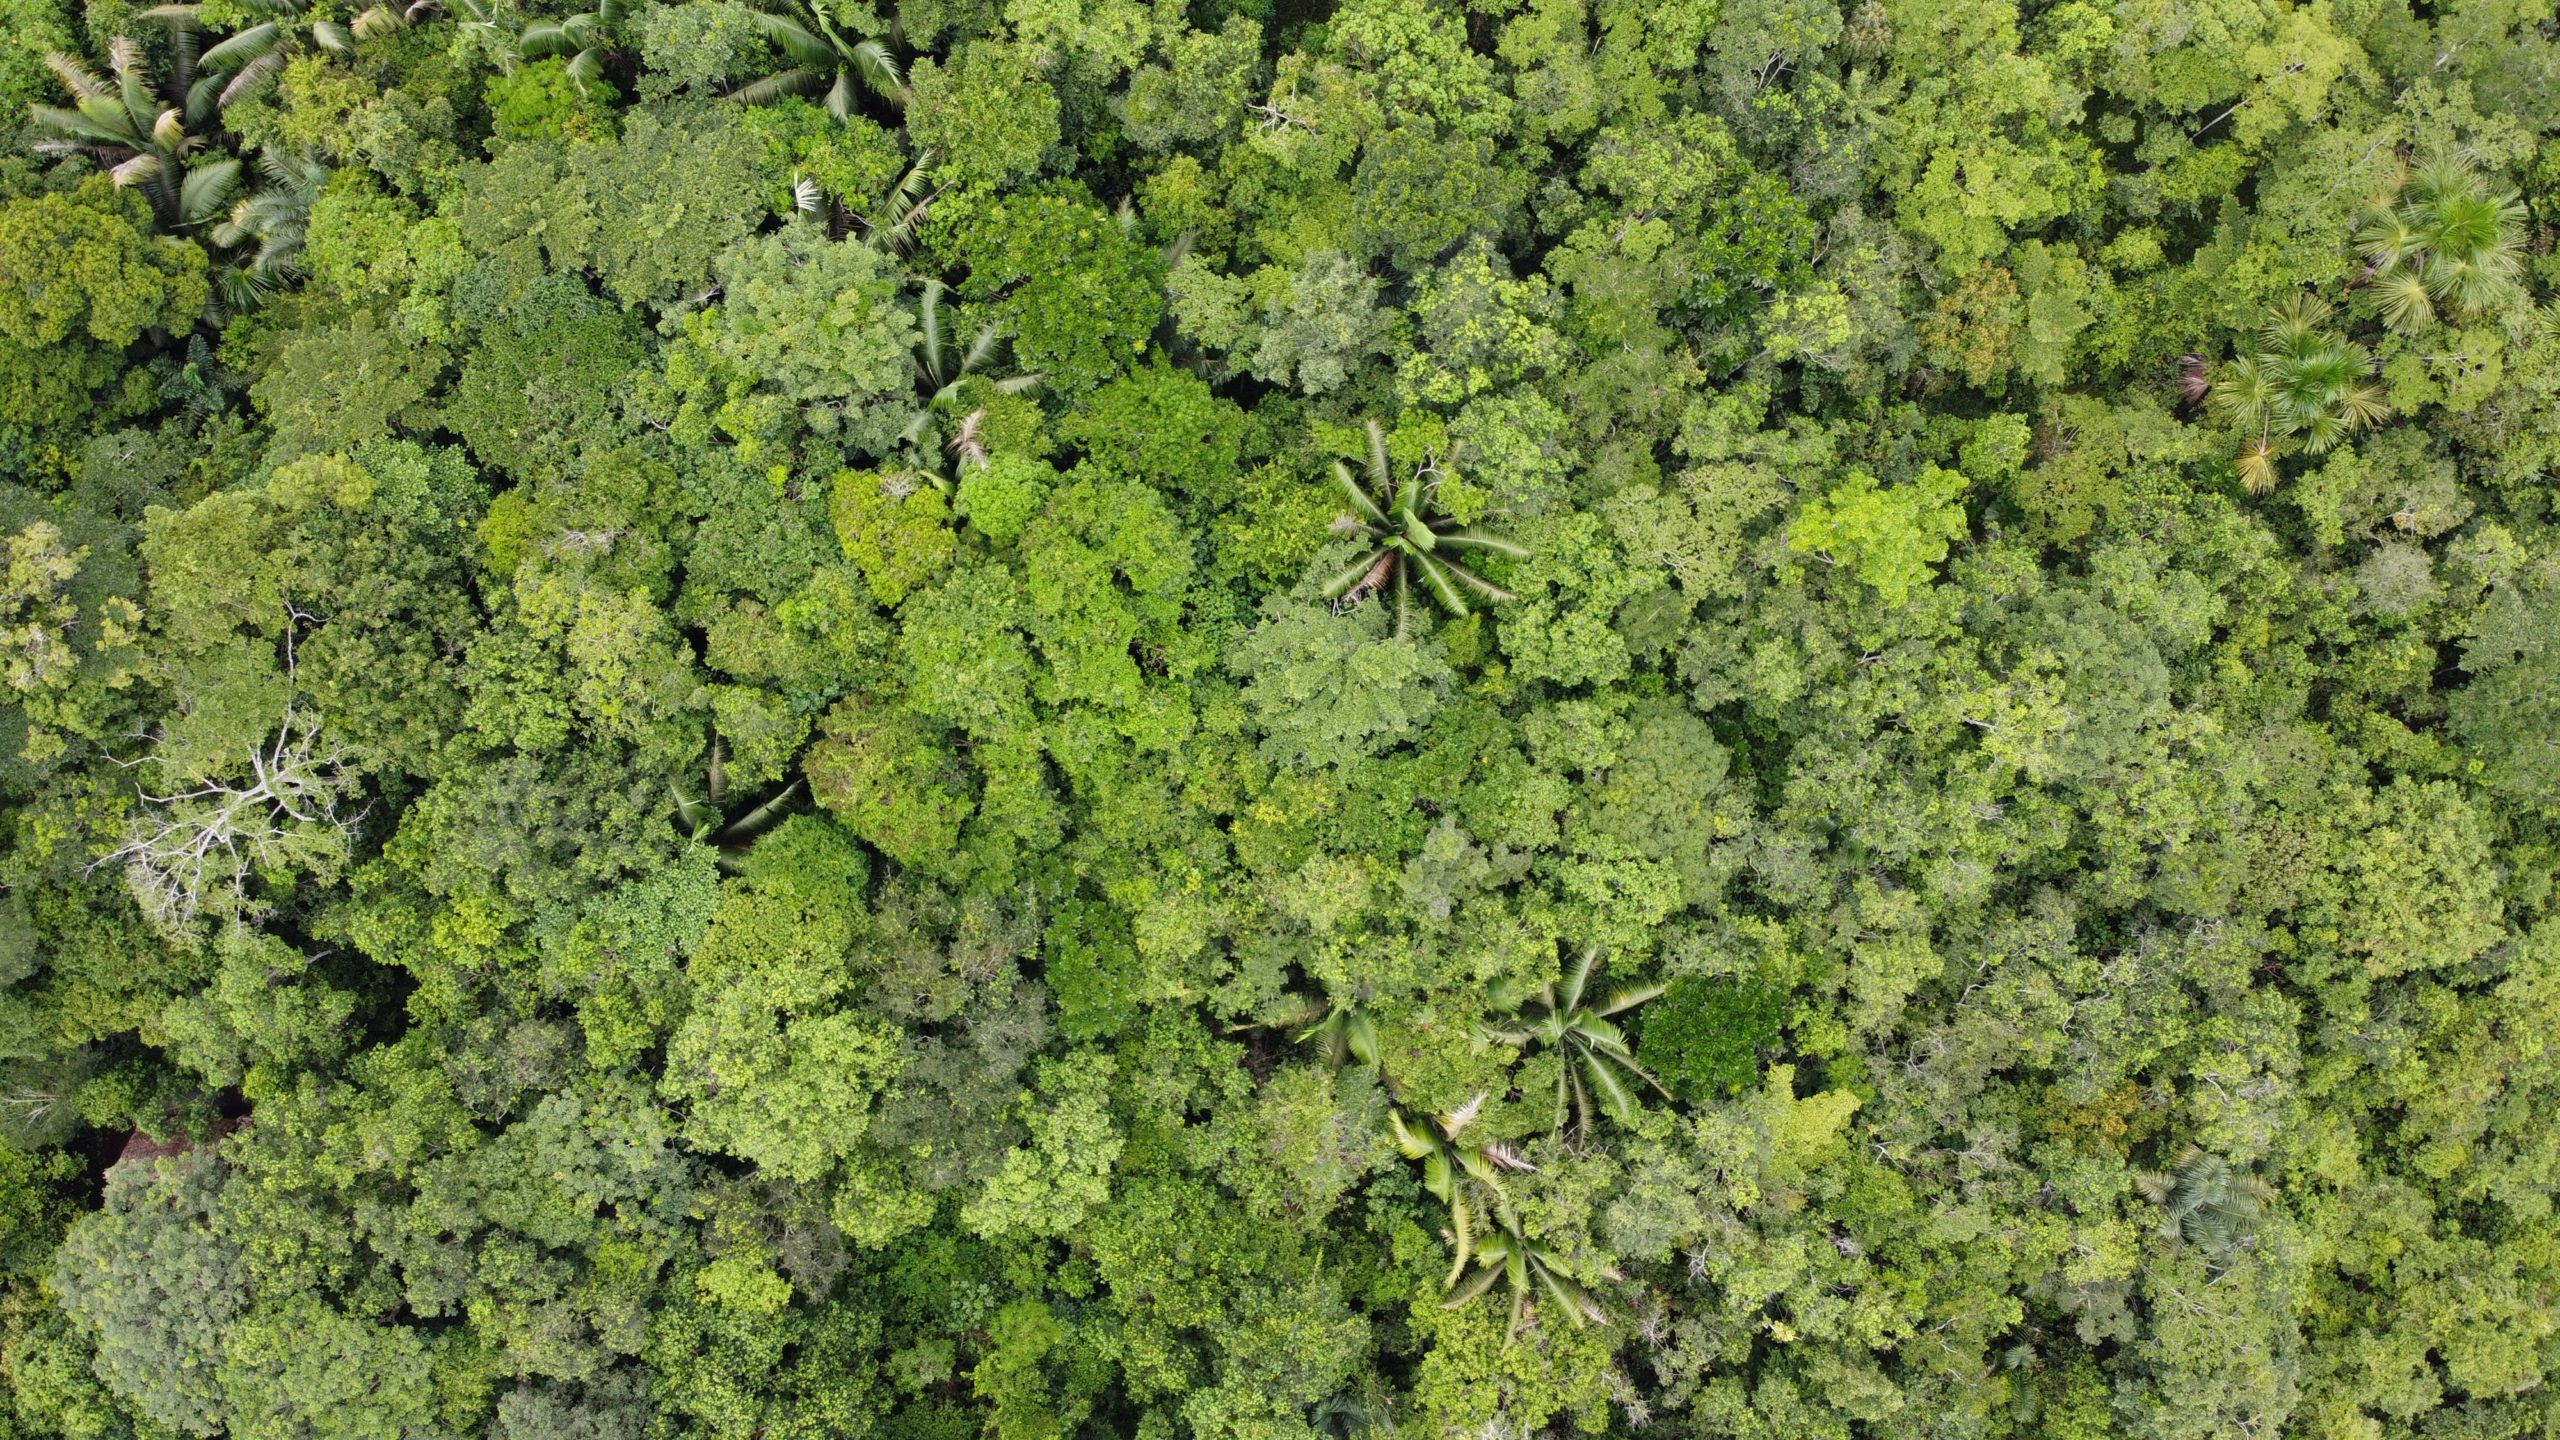 Crowdfunding effort to LiDAR scan the Amazon